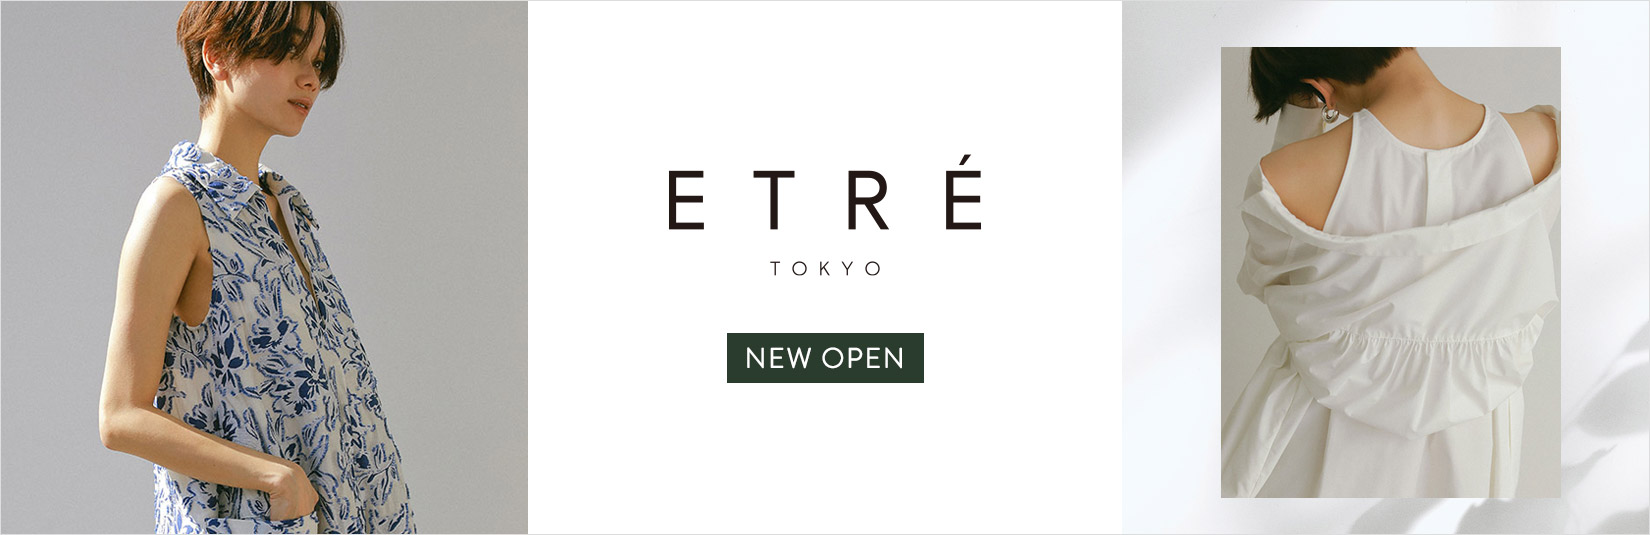 ETRÉ TOKYO - New Open -